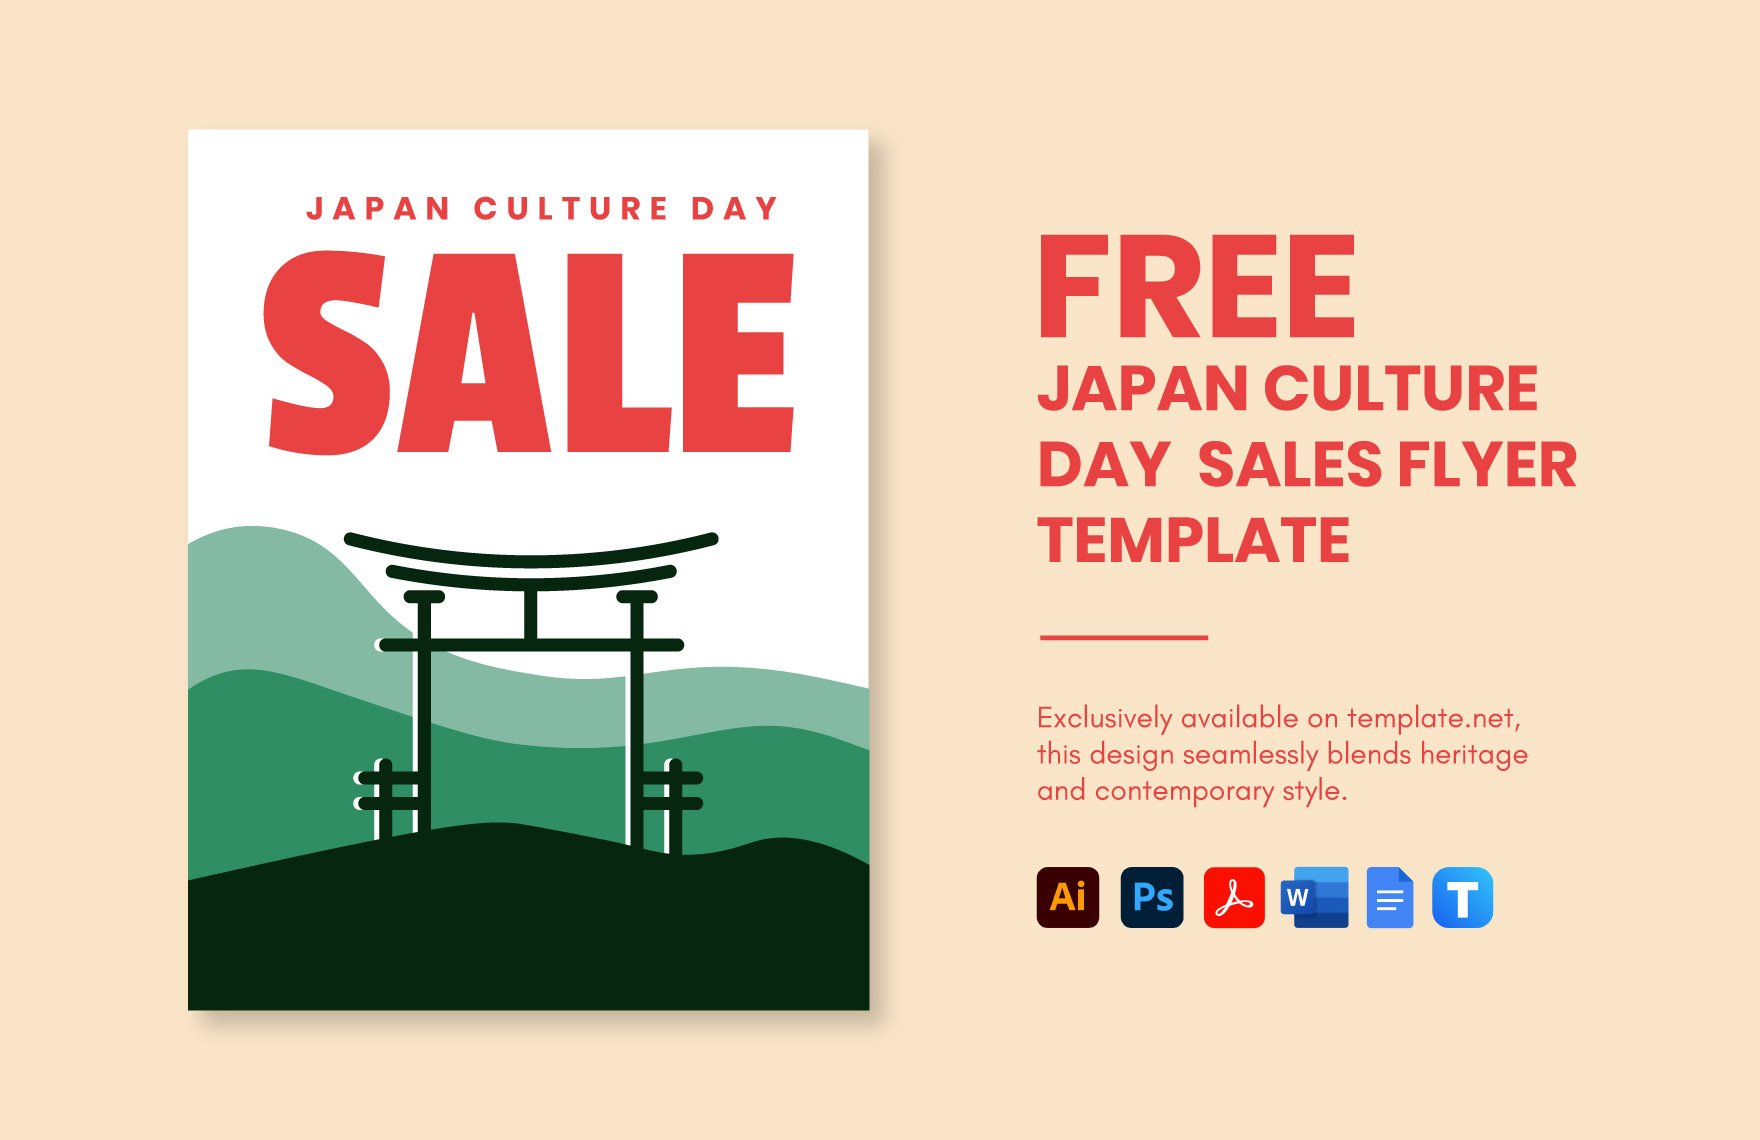 Japan Culture Day Sales Flyer Template in Word, Google Docs, PDF, Illustrator, PSD